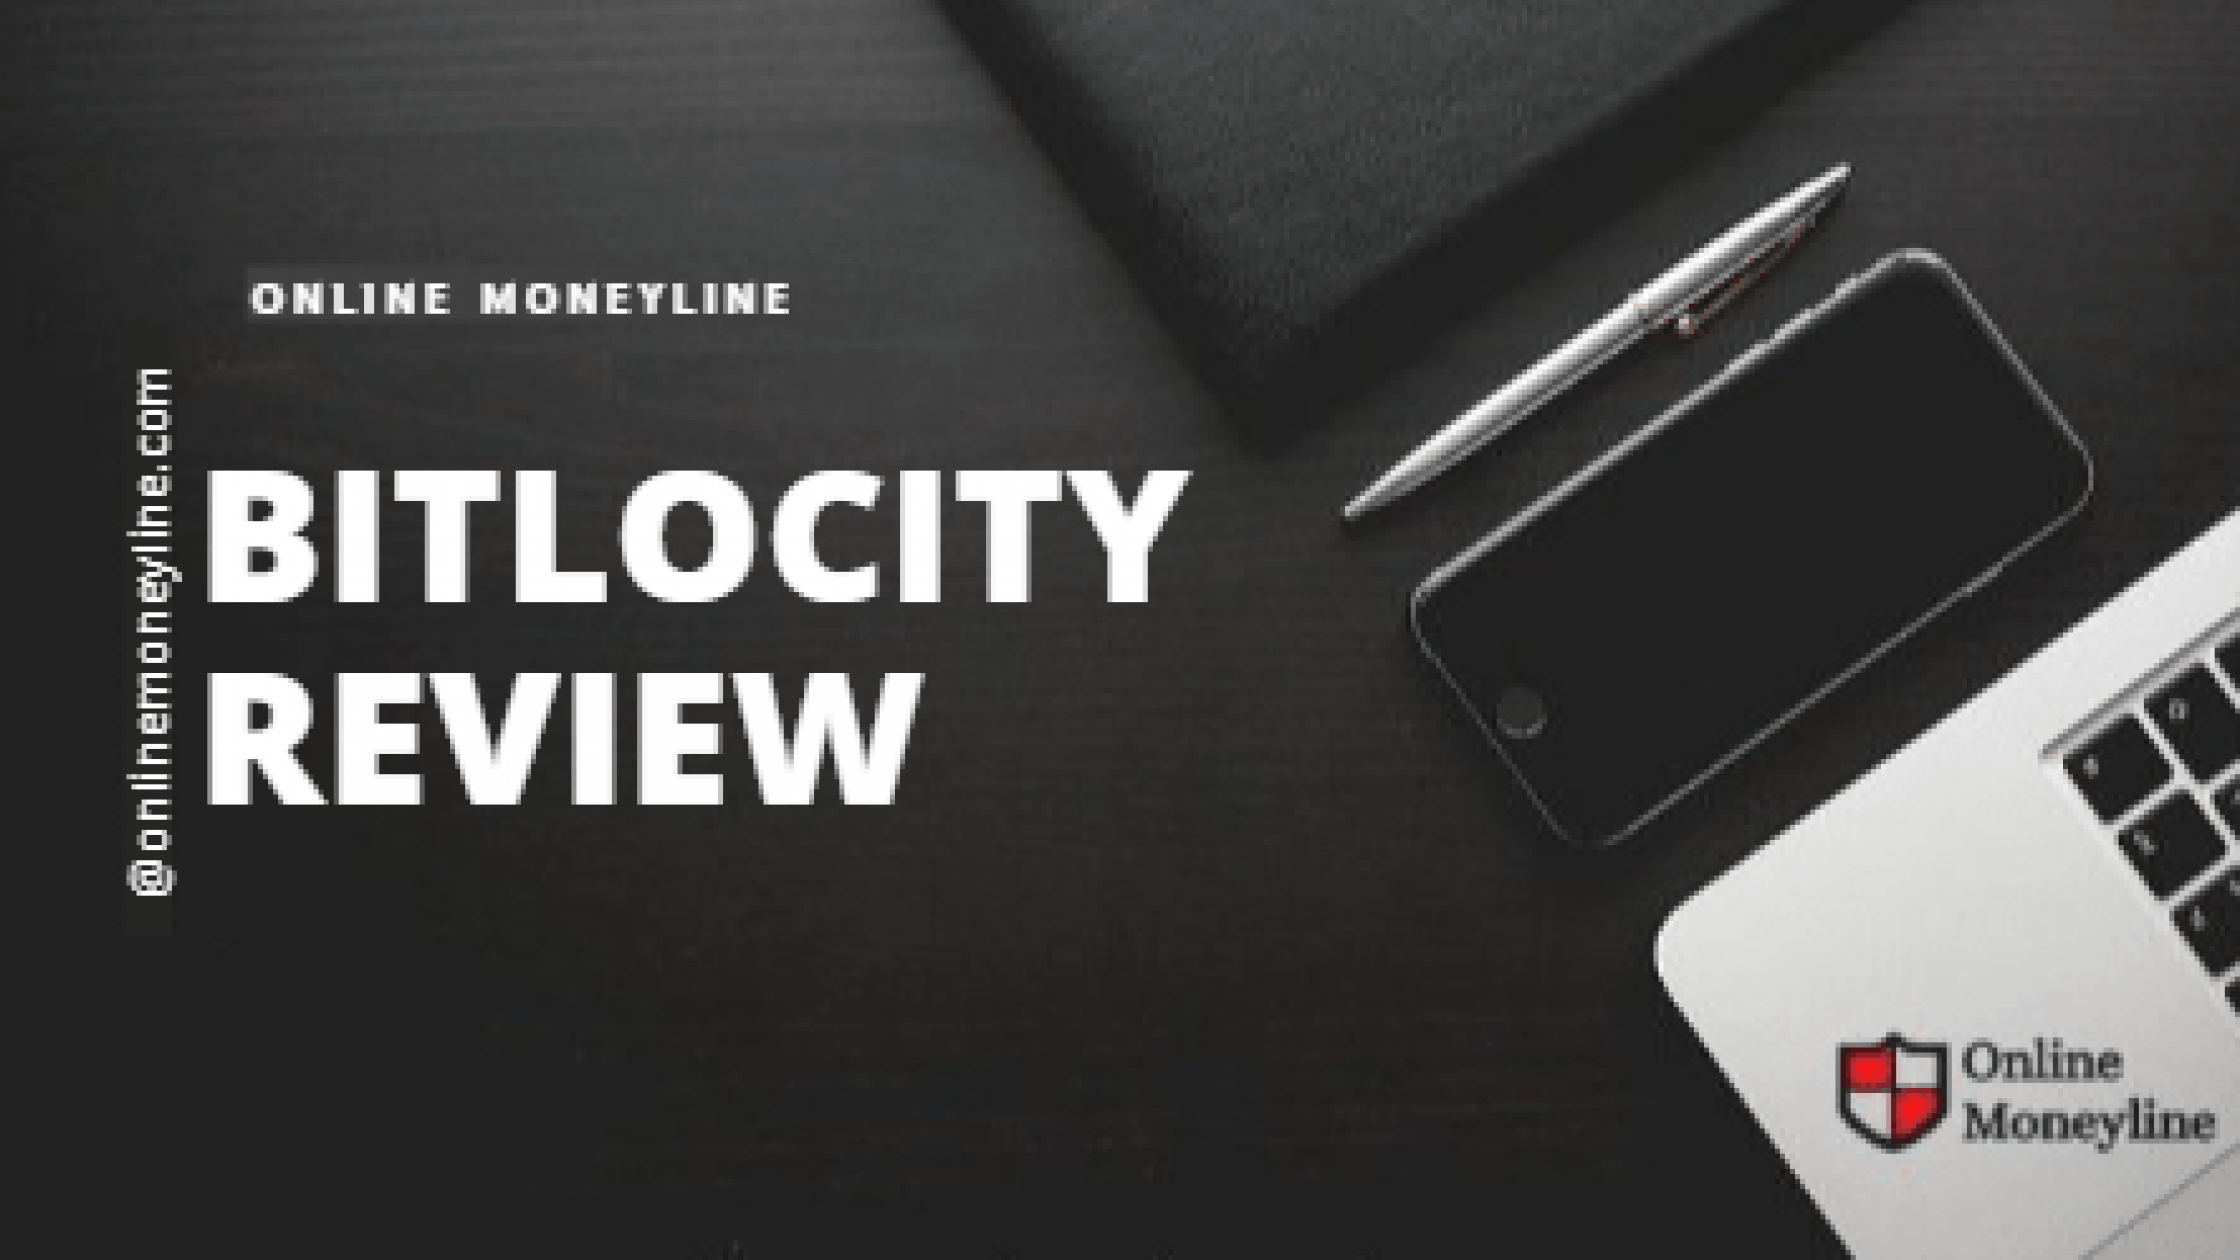 Bitlocity Review 